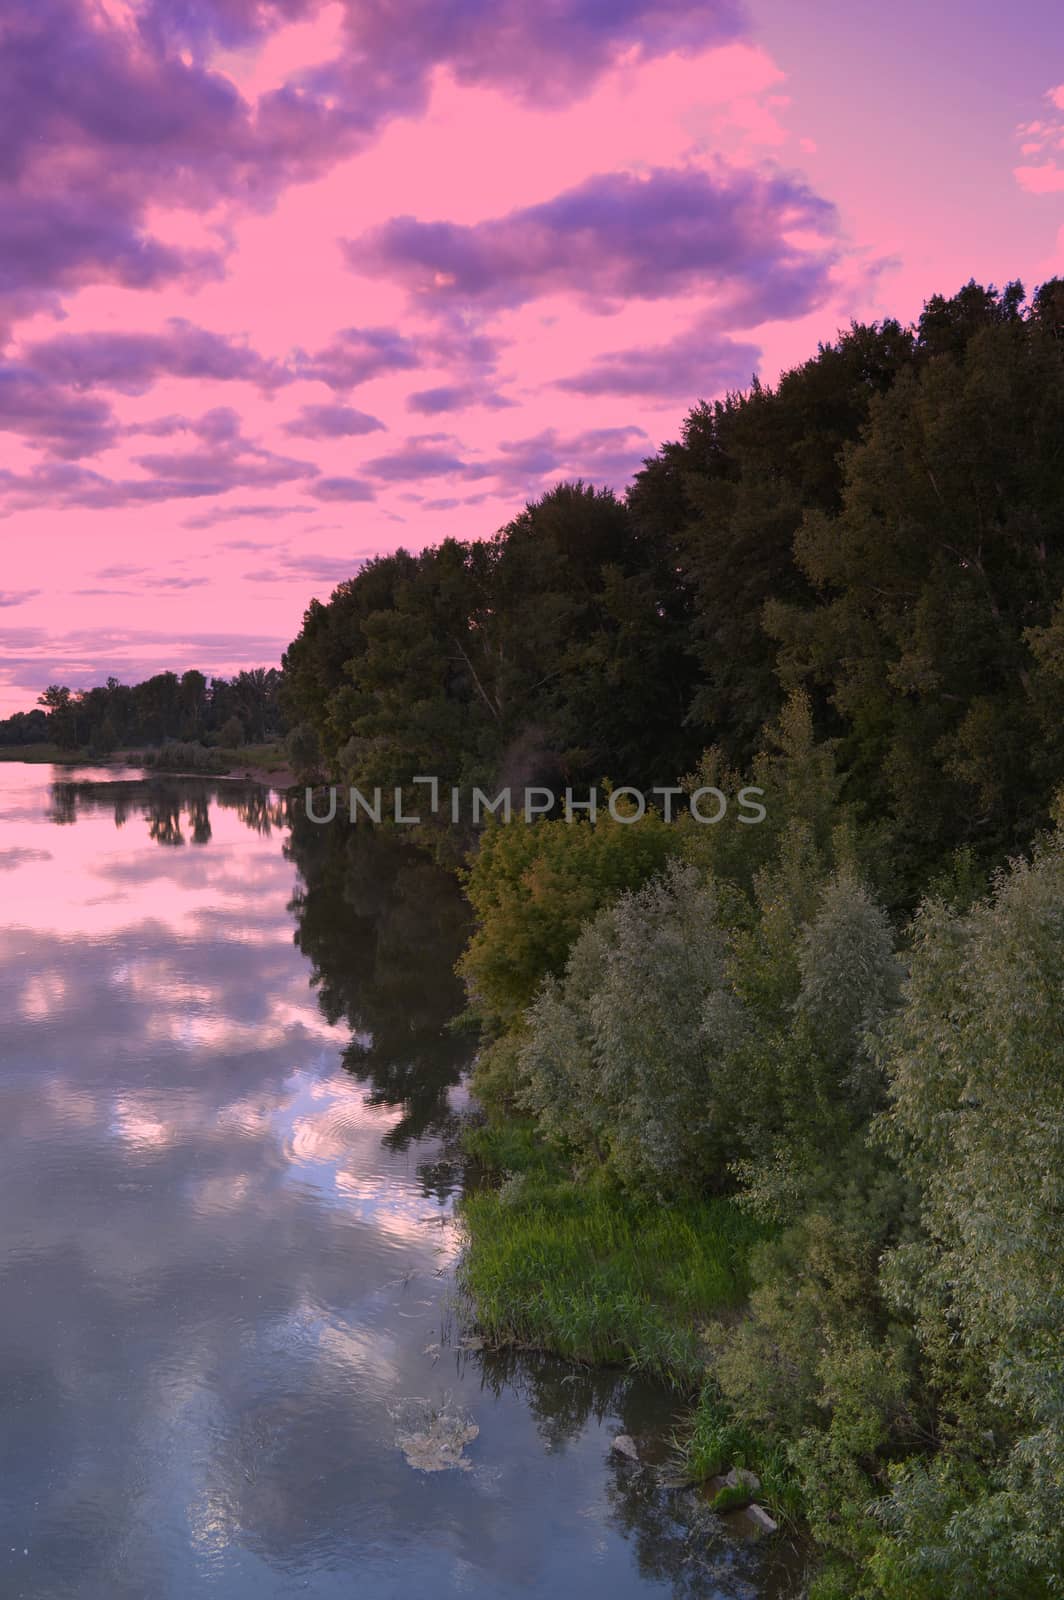 beautiful evening landscape by sergpet